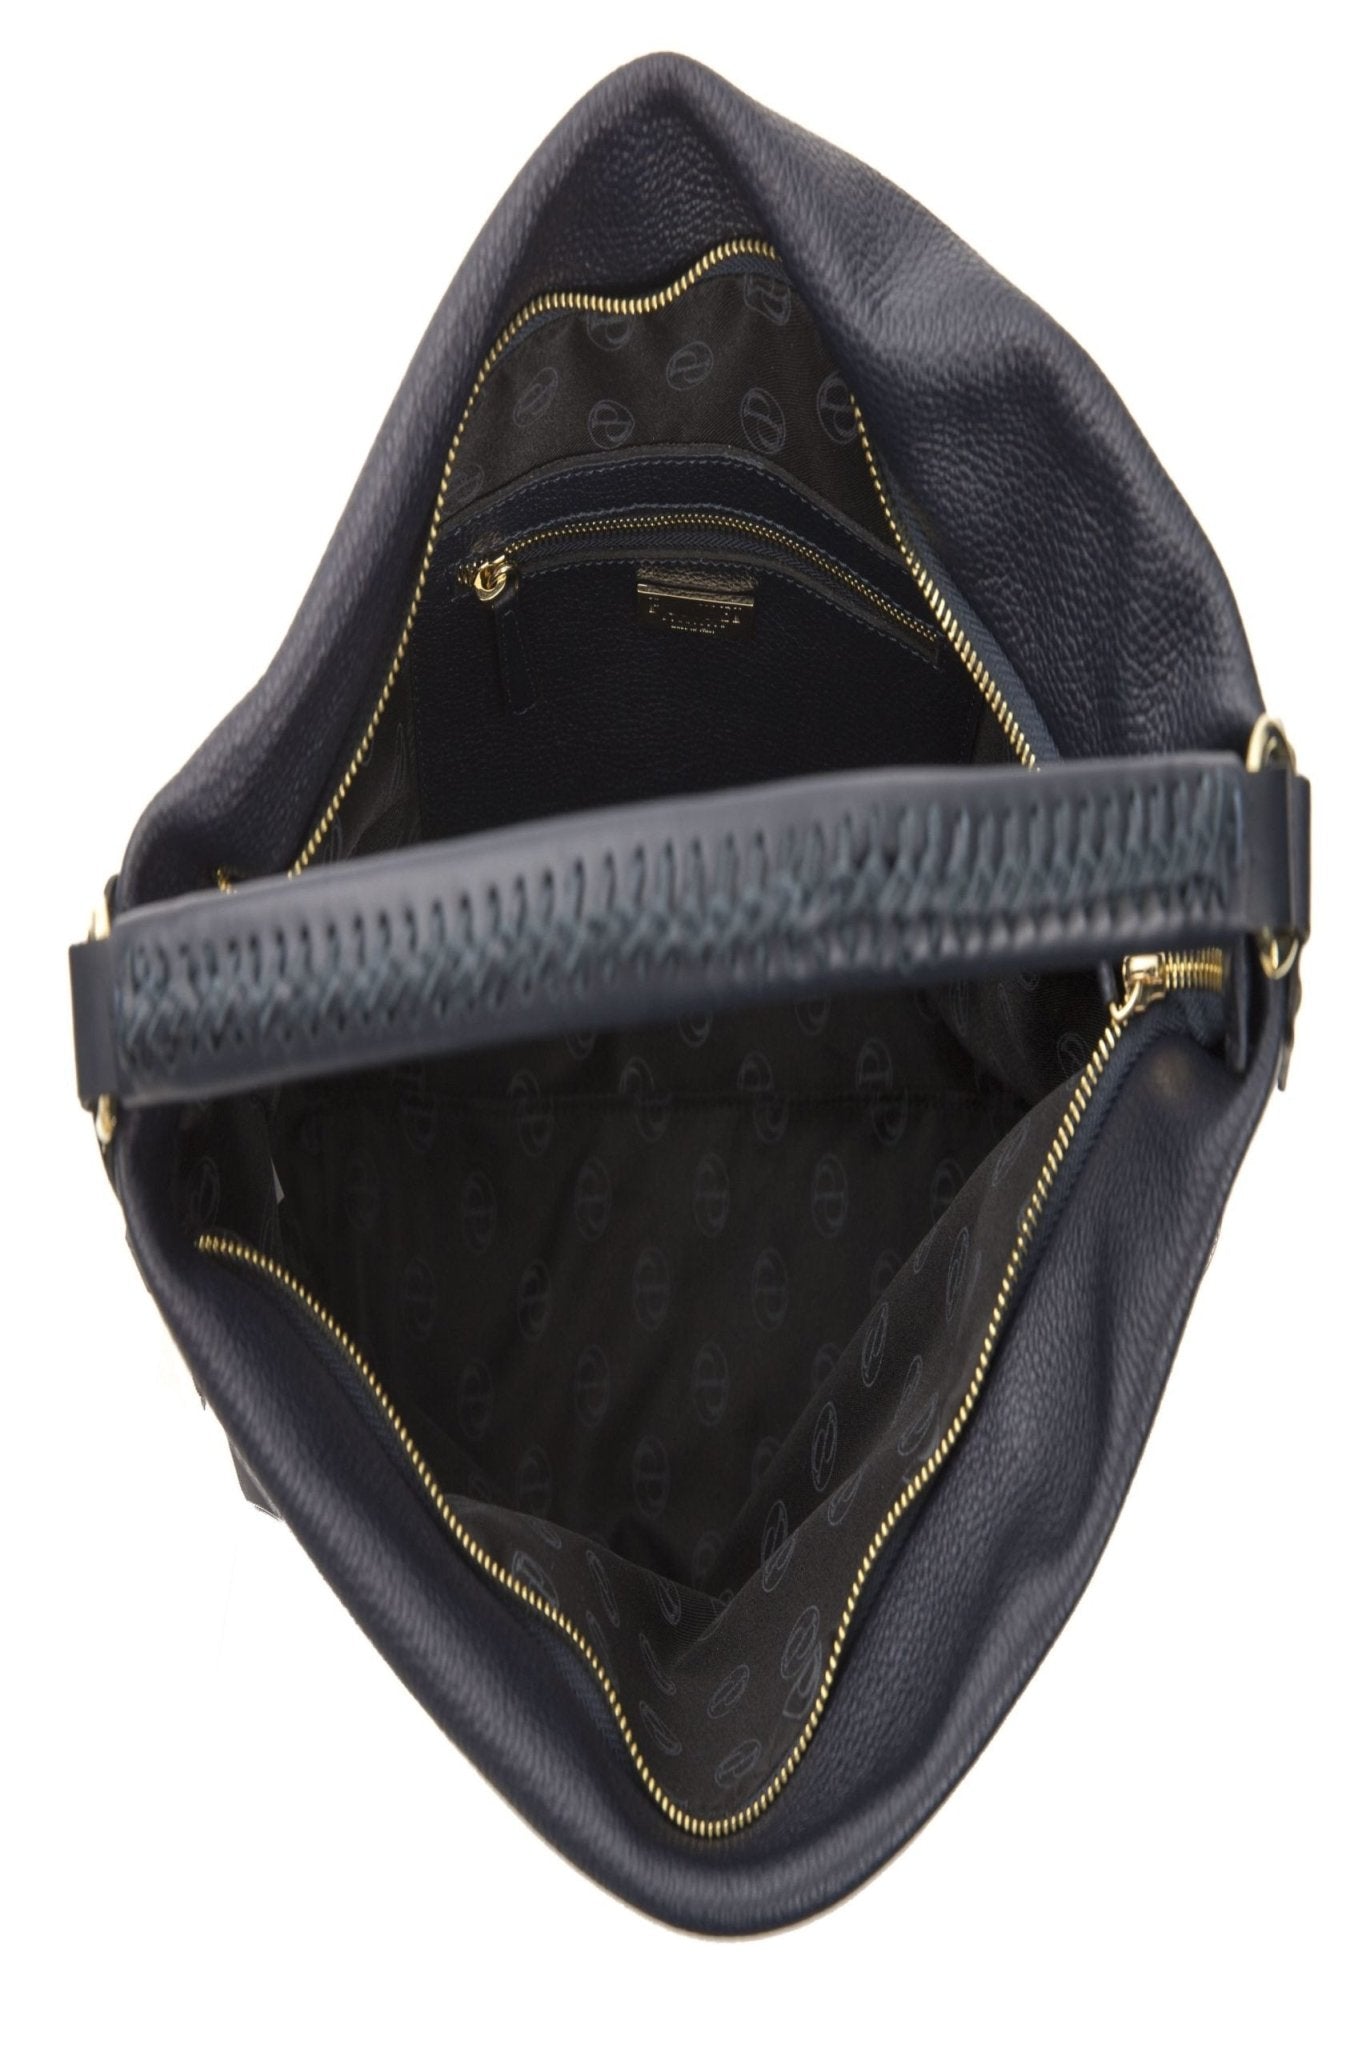 Pompei Donatella Gray Leather Shoulder Bag - Fizigo